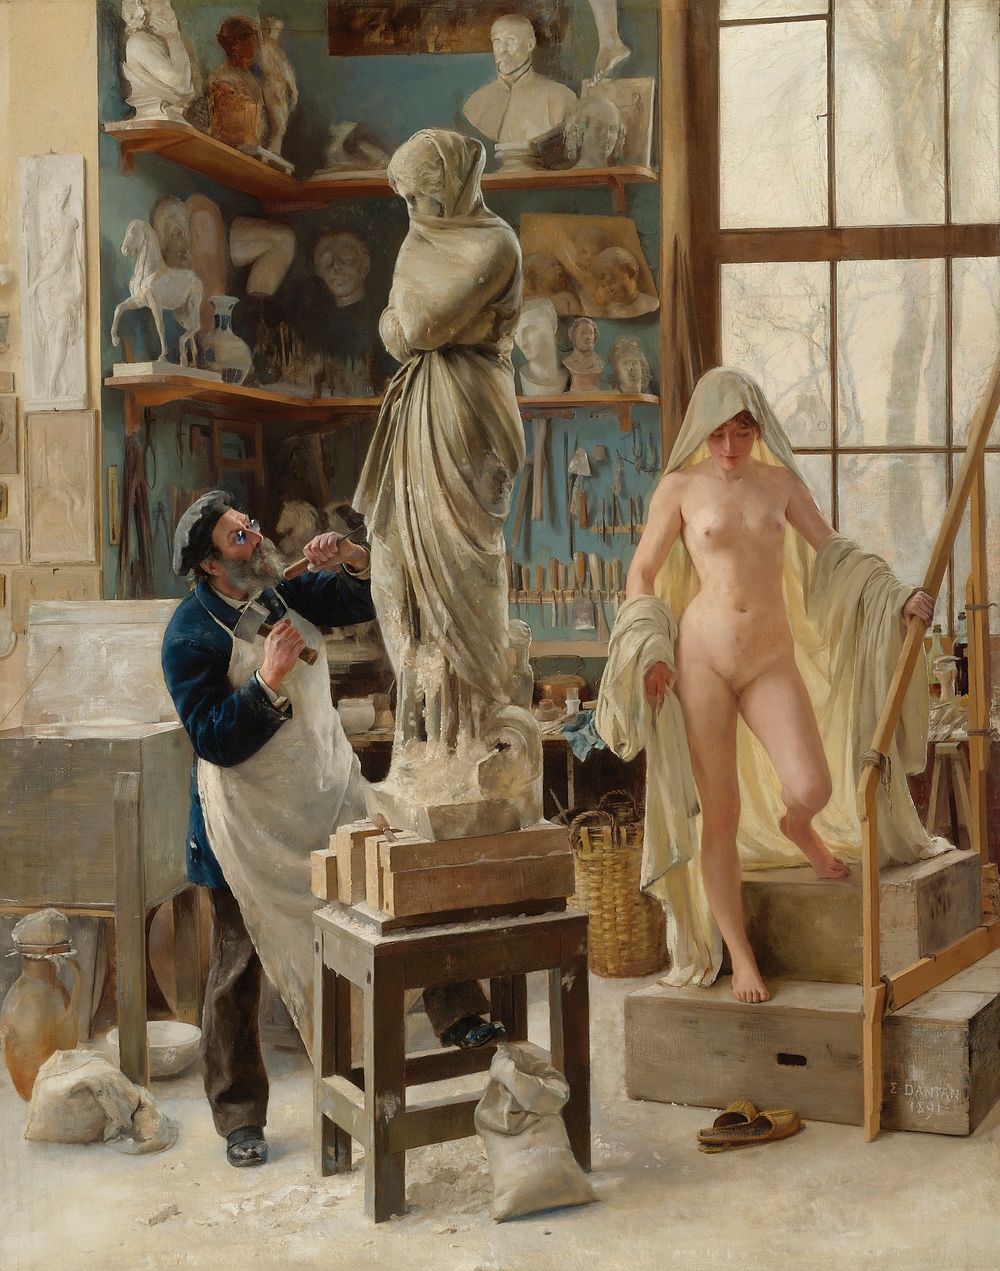 Une Restauration (A Restoration), oil painting by Edouard Dantan, 1891